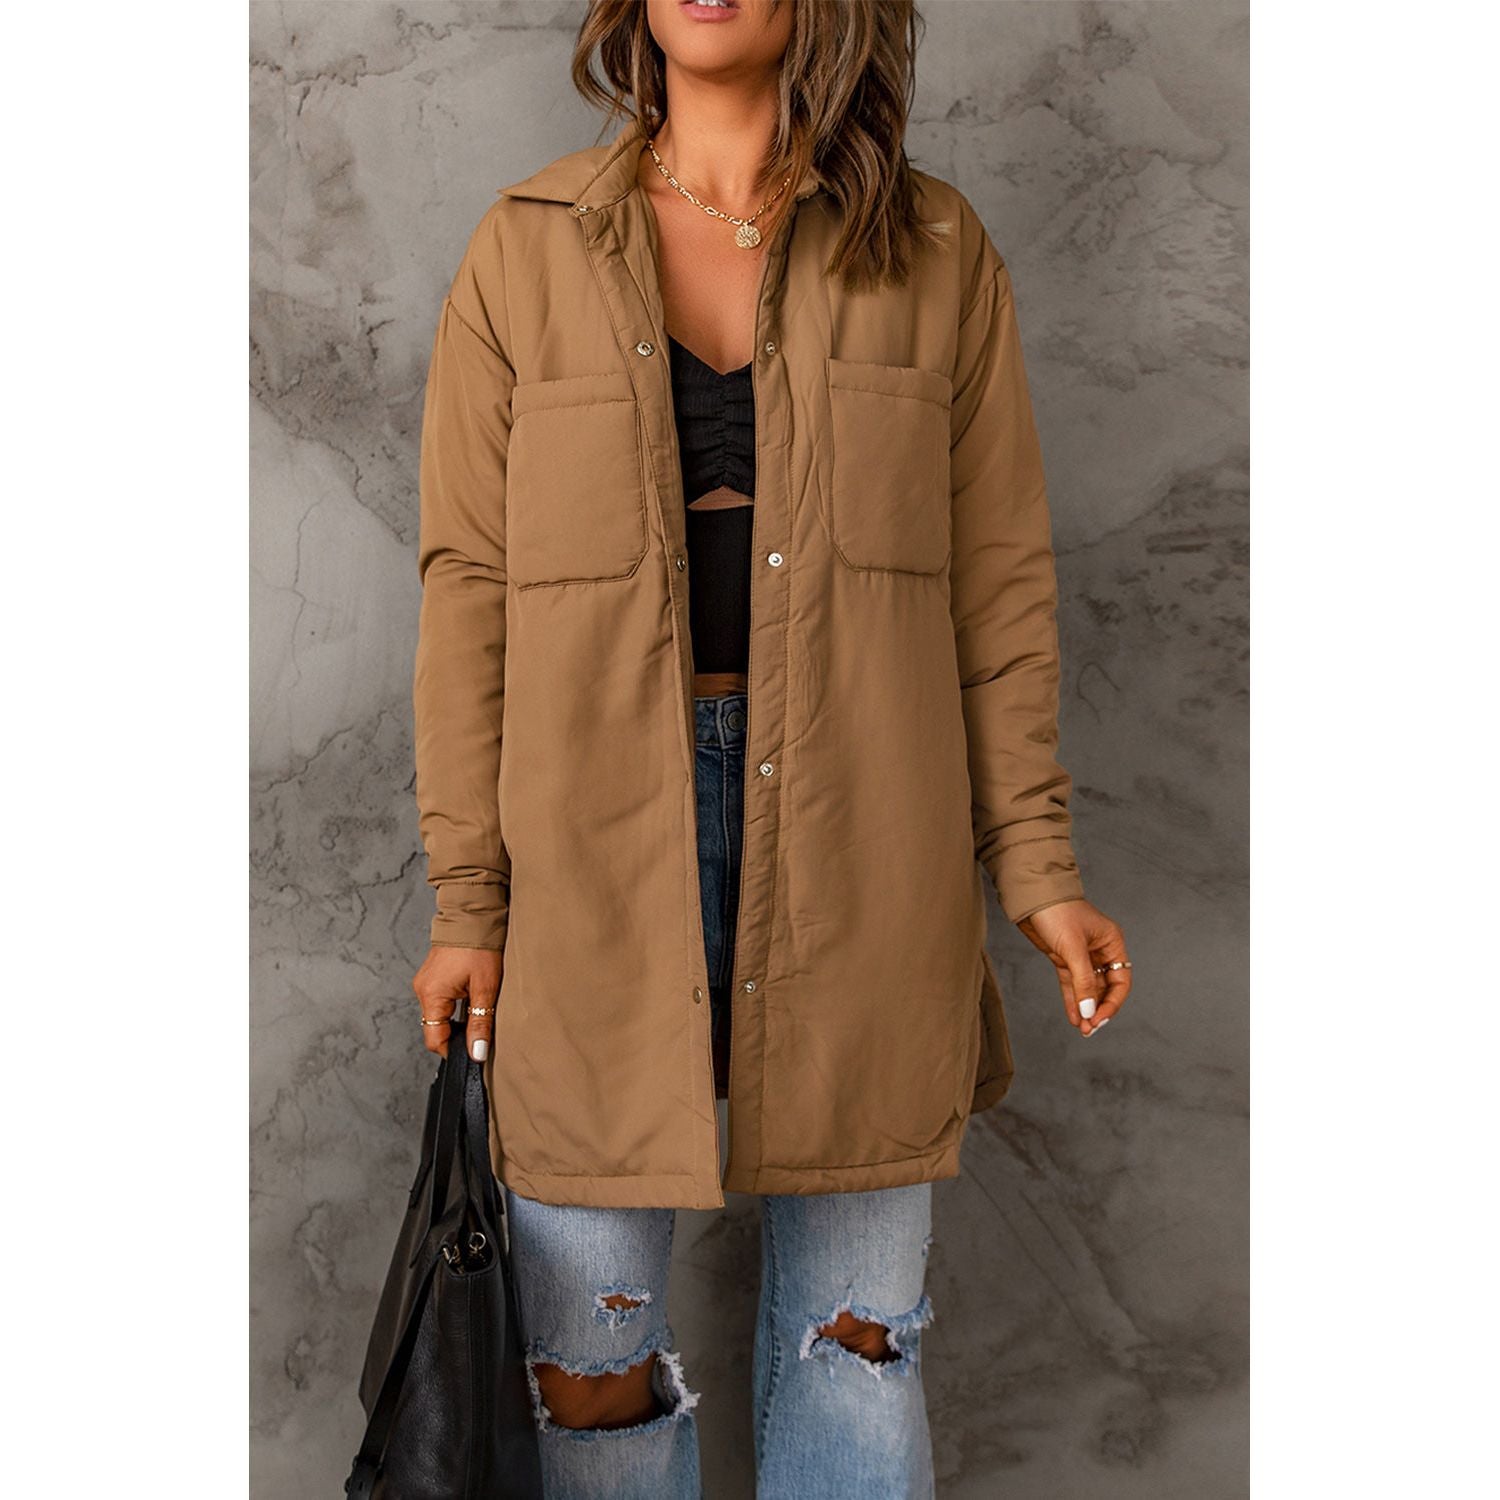 Snap Down Side Slit Jacket with Pockets - TiffanyzKlozet